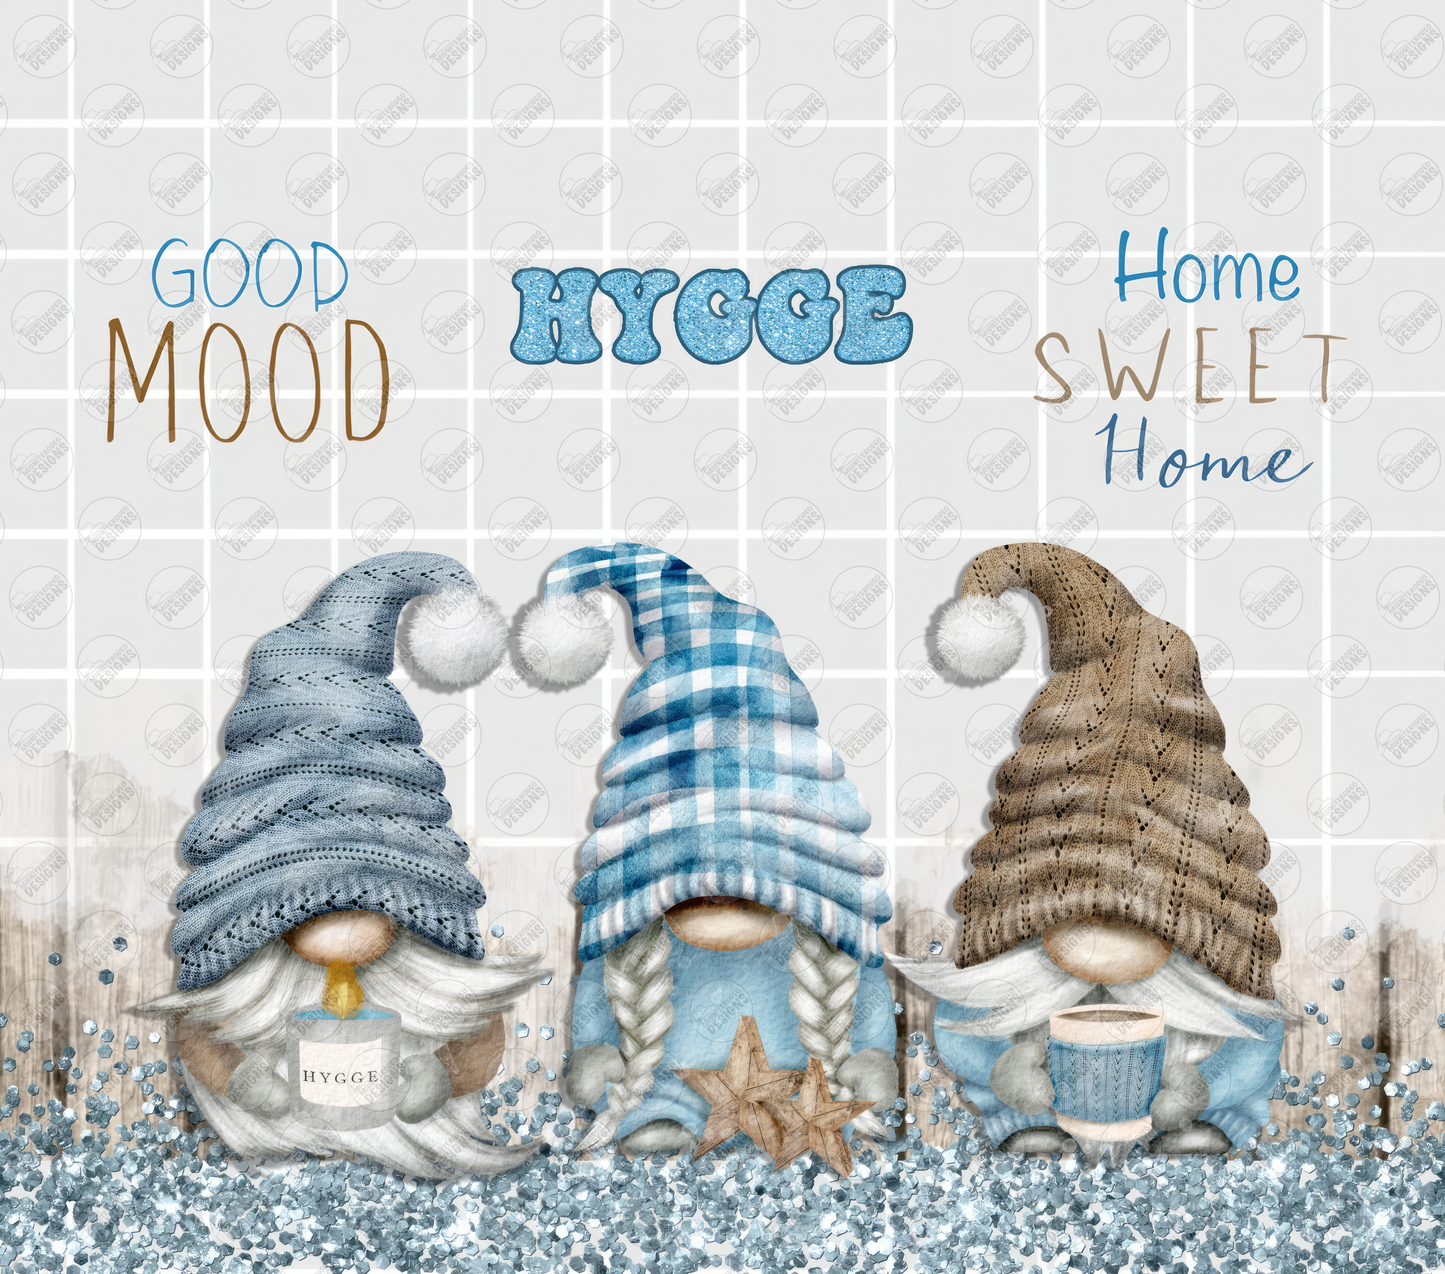 Gnomes - Good Mood, Hygge, Home Sweet Home